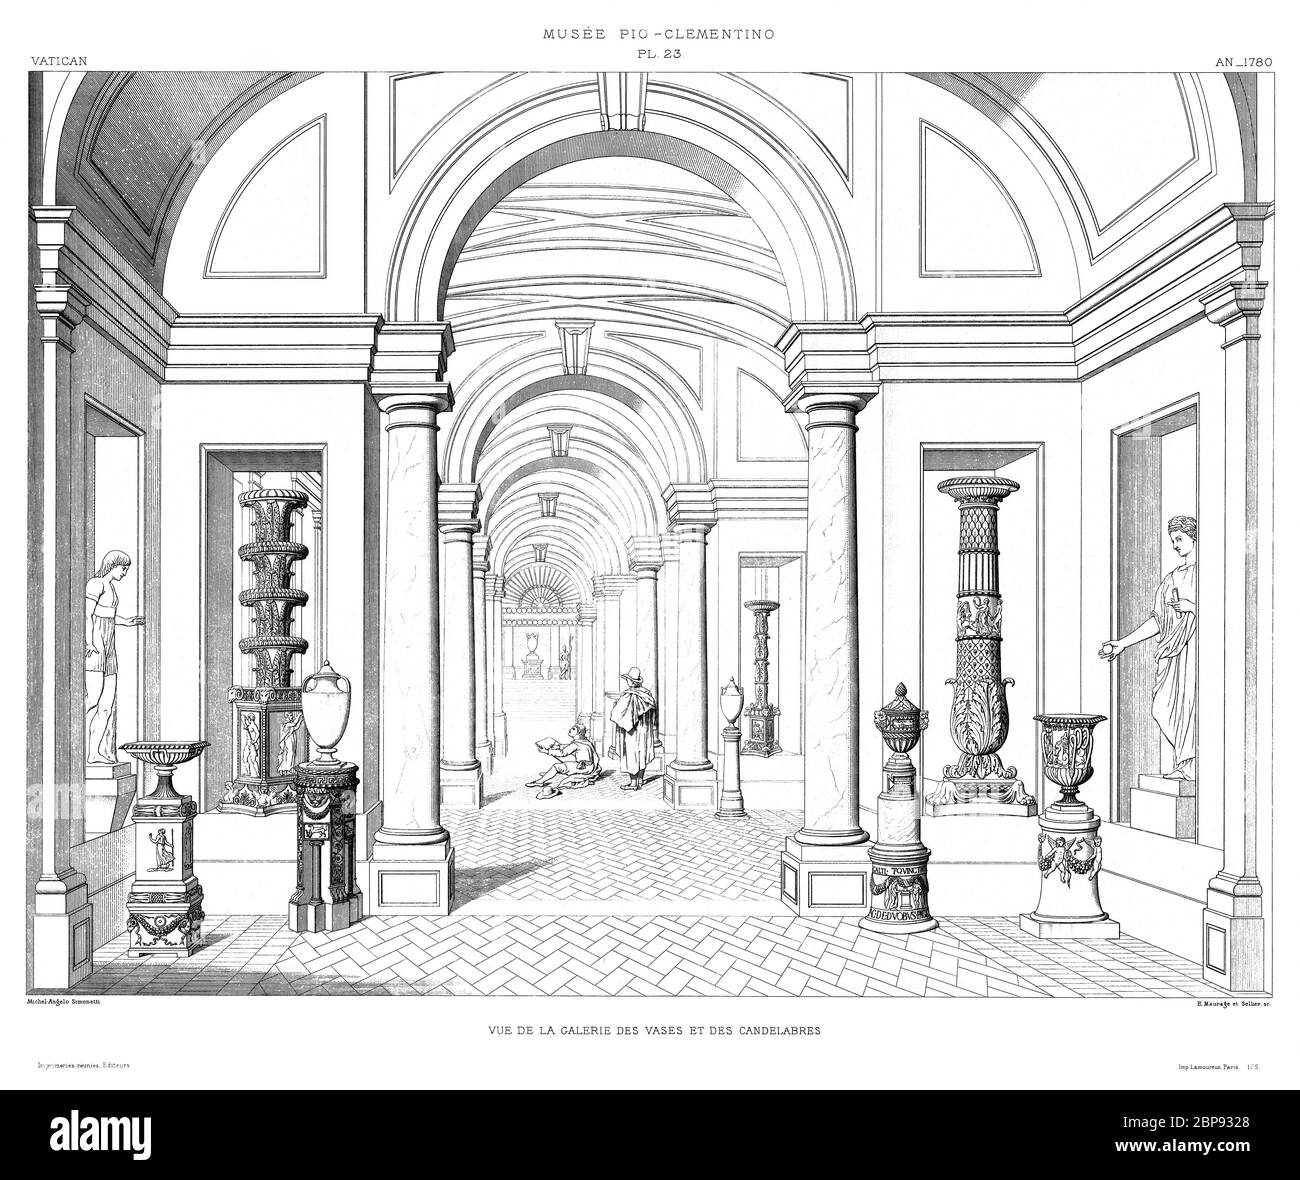 Rom, Vatikan: Museum Pio Clementino. Vasen und Candelabra Galerie 1780, aus dem Vatikan 1882. Stockfoto